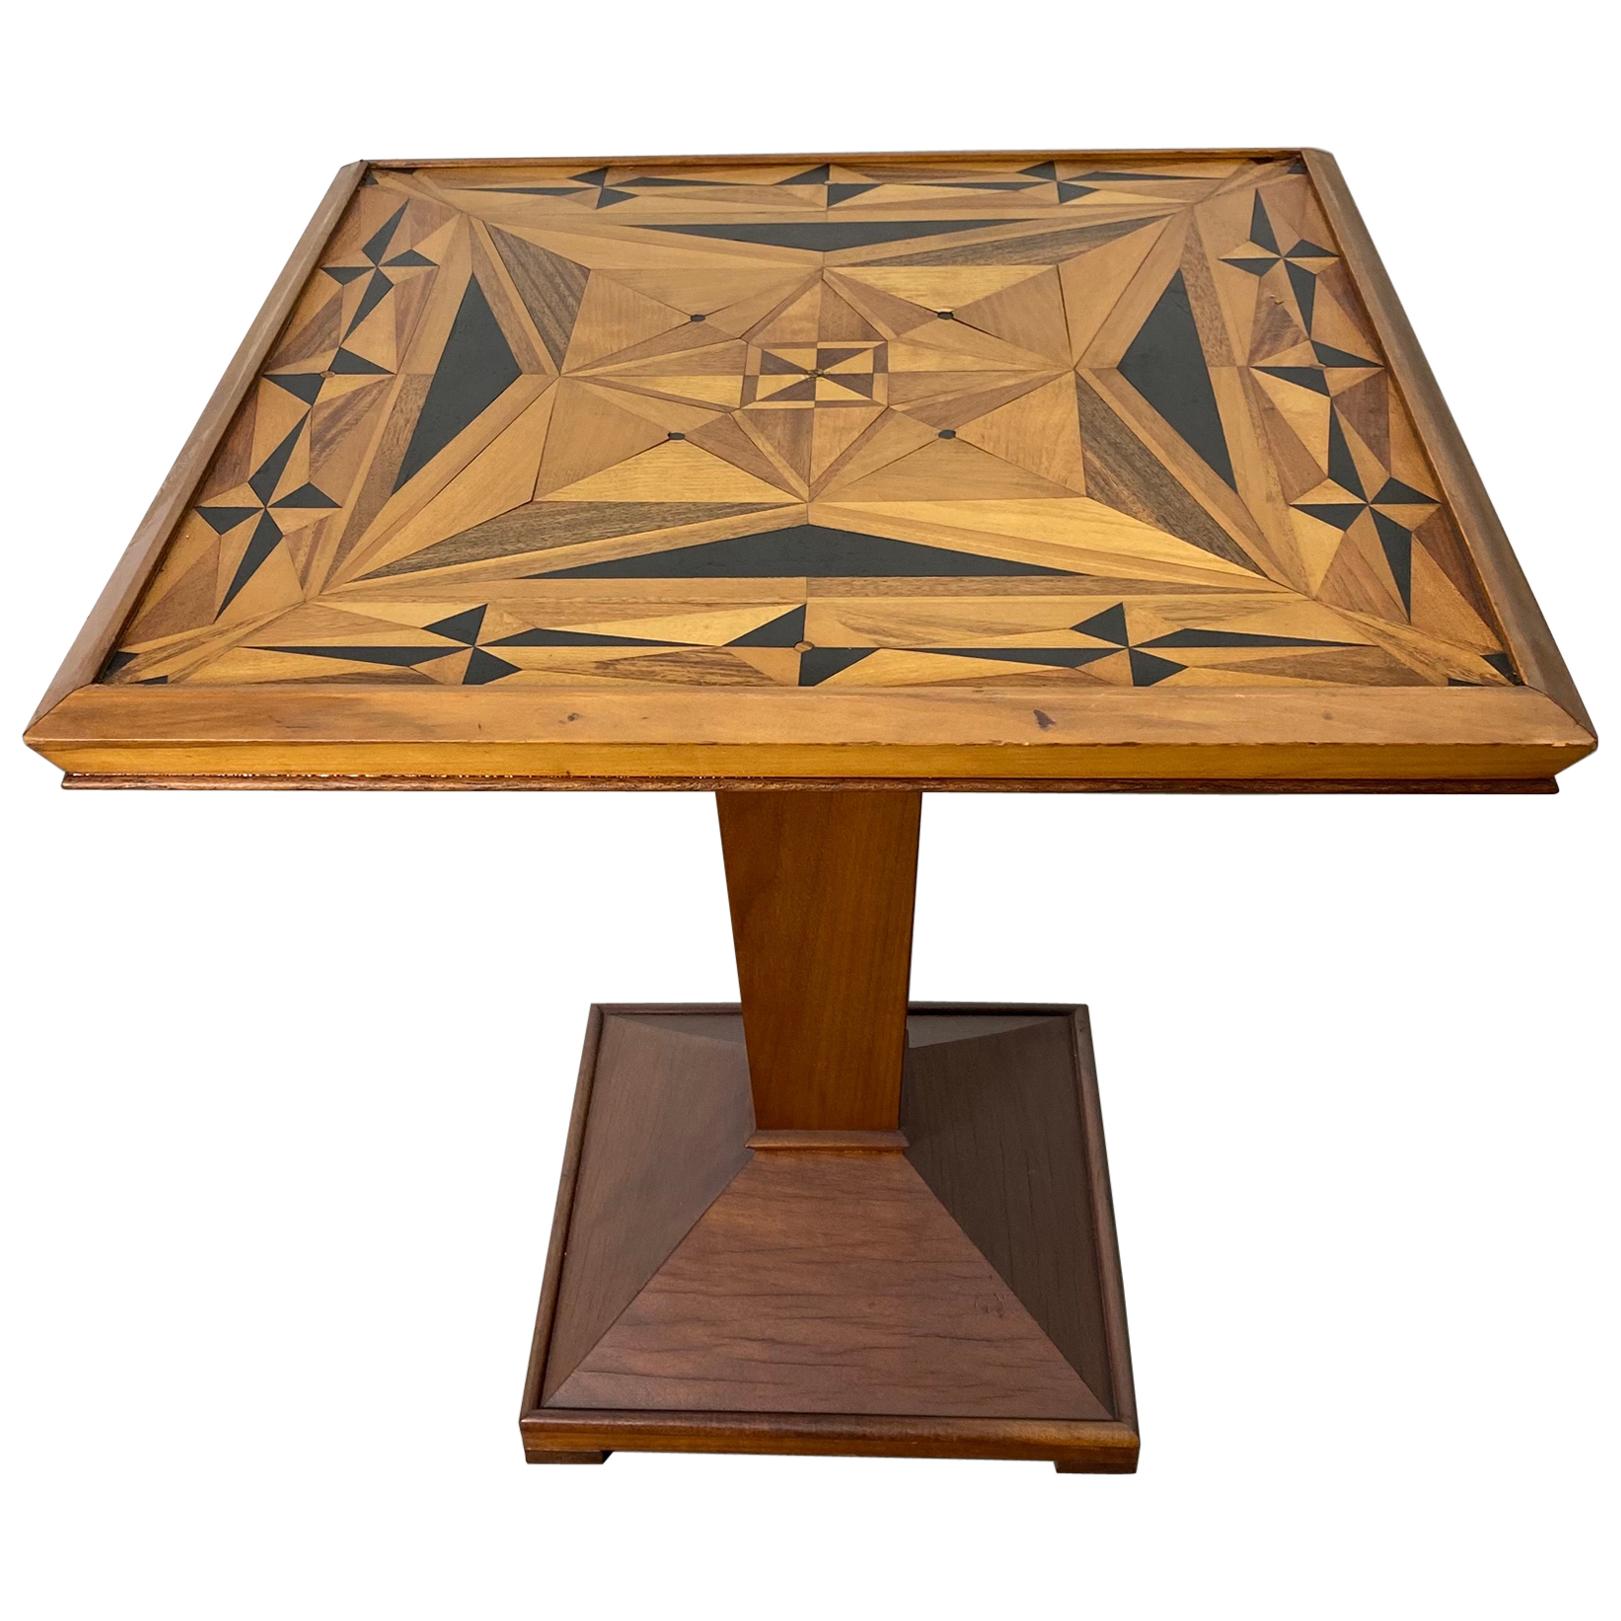 American Folk Art Geometric Inlay Marquetry Game Table, Modernist, Art Deco